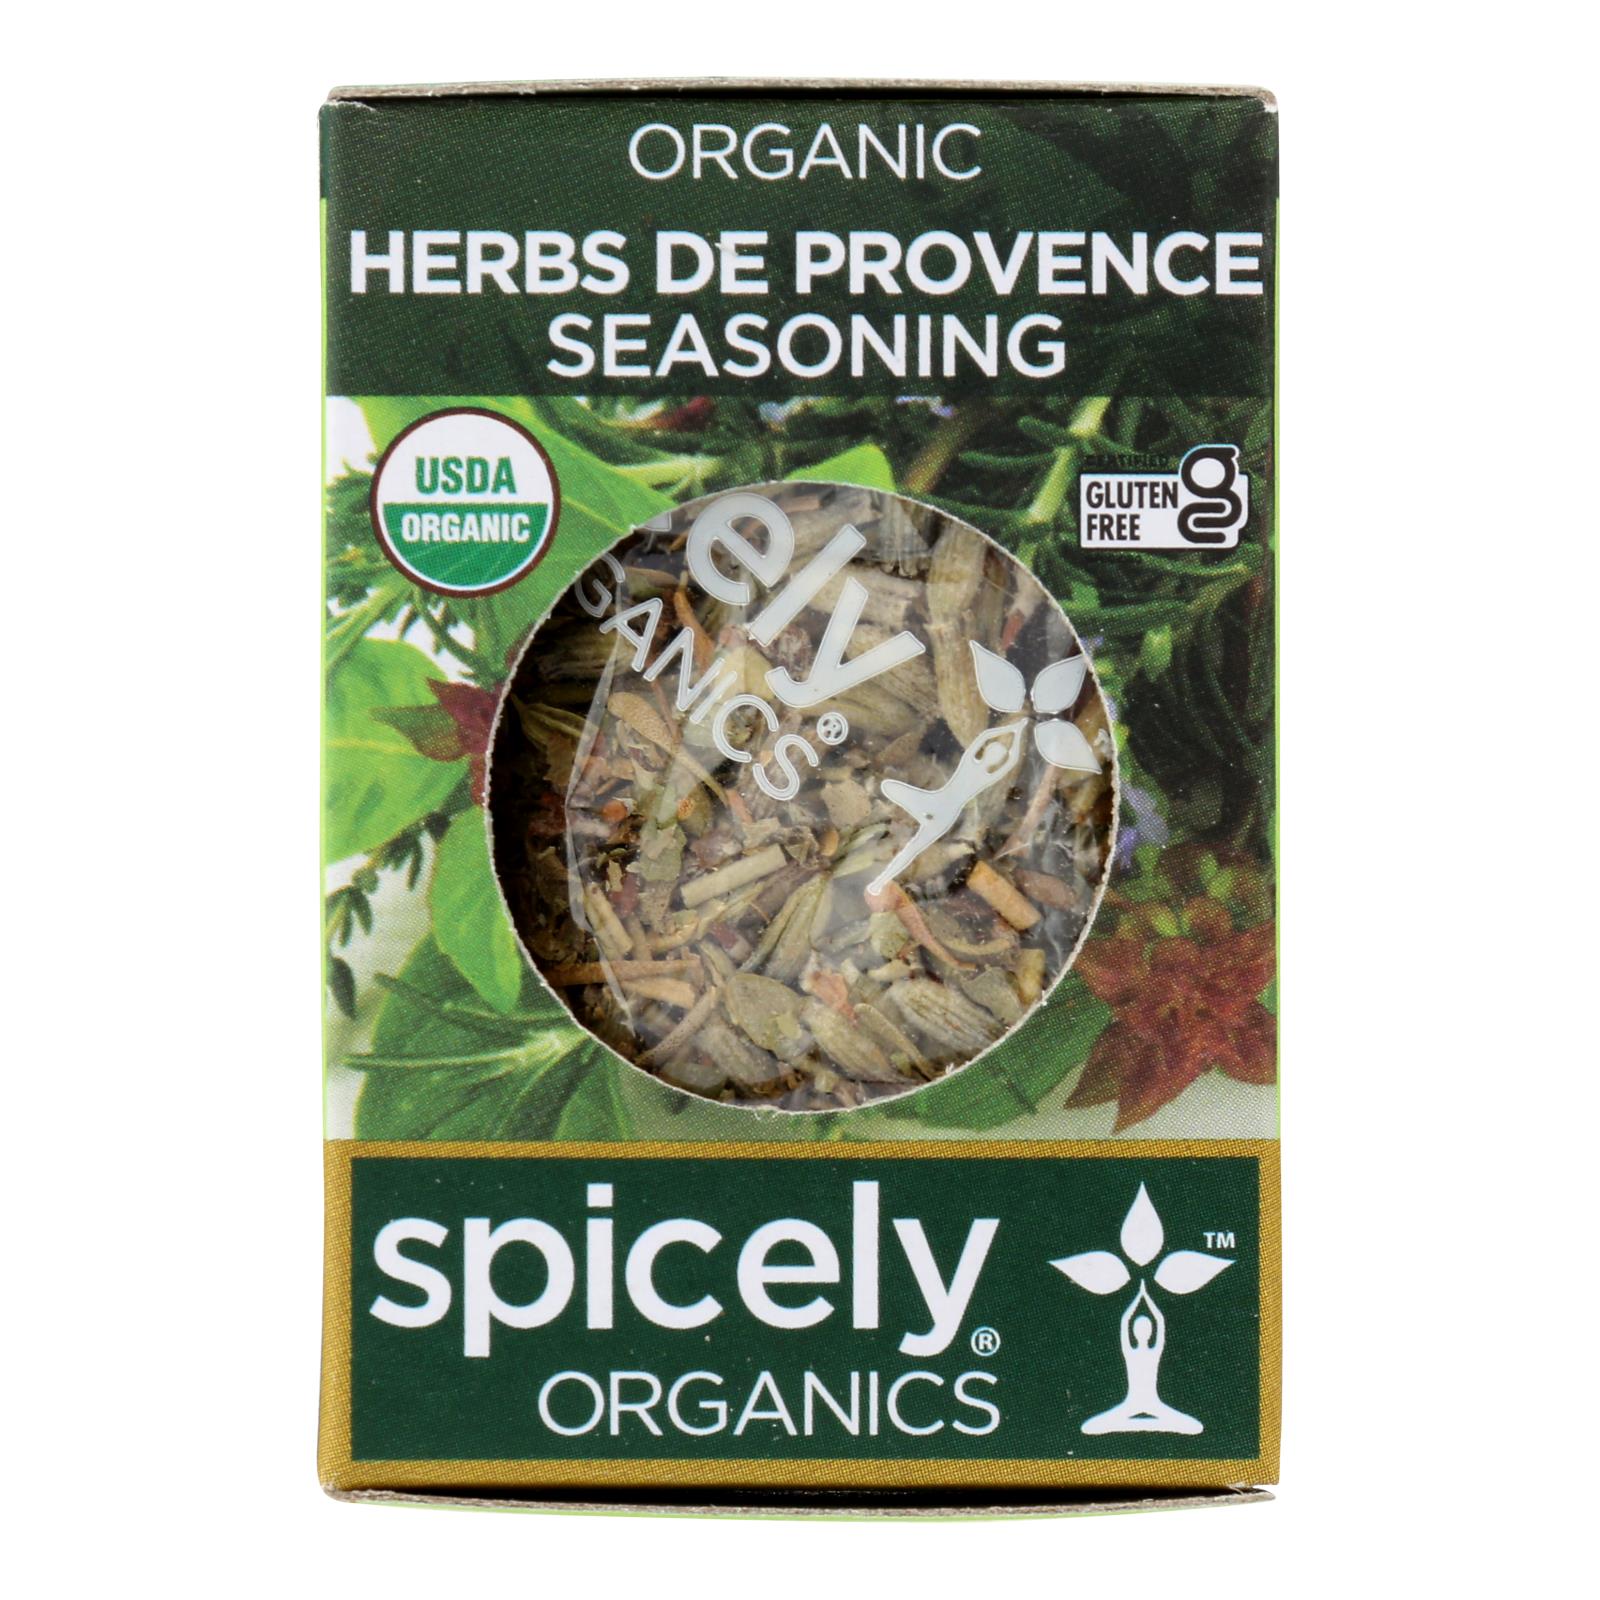 Spicely Organics - Organic Herbs De Provence Seasoning - Case of 6 - 0.1 oz.